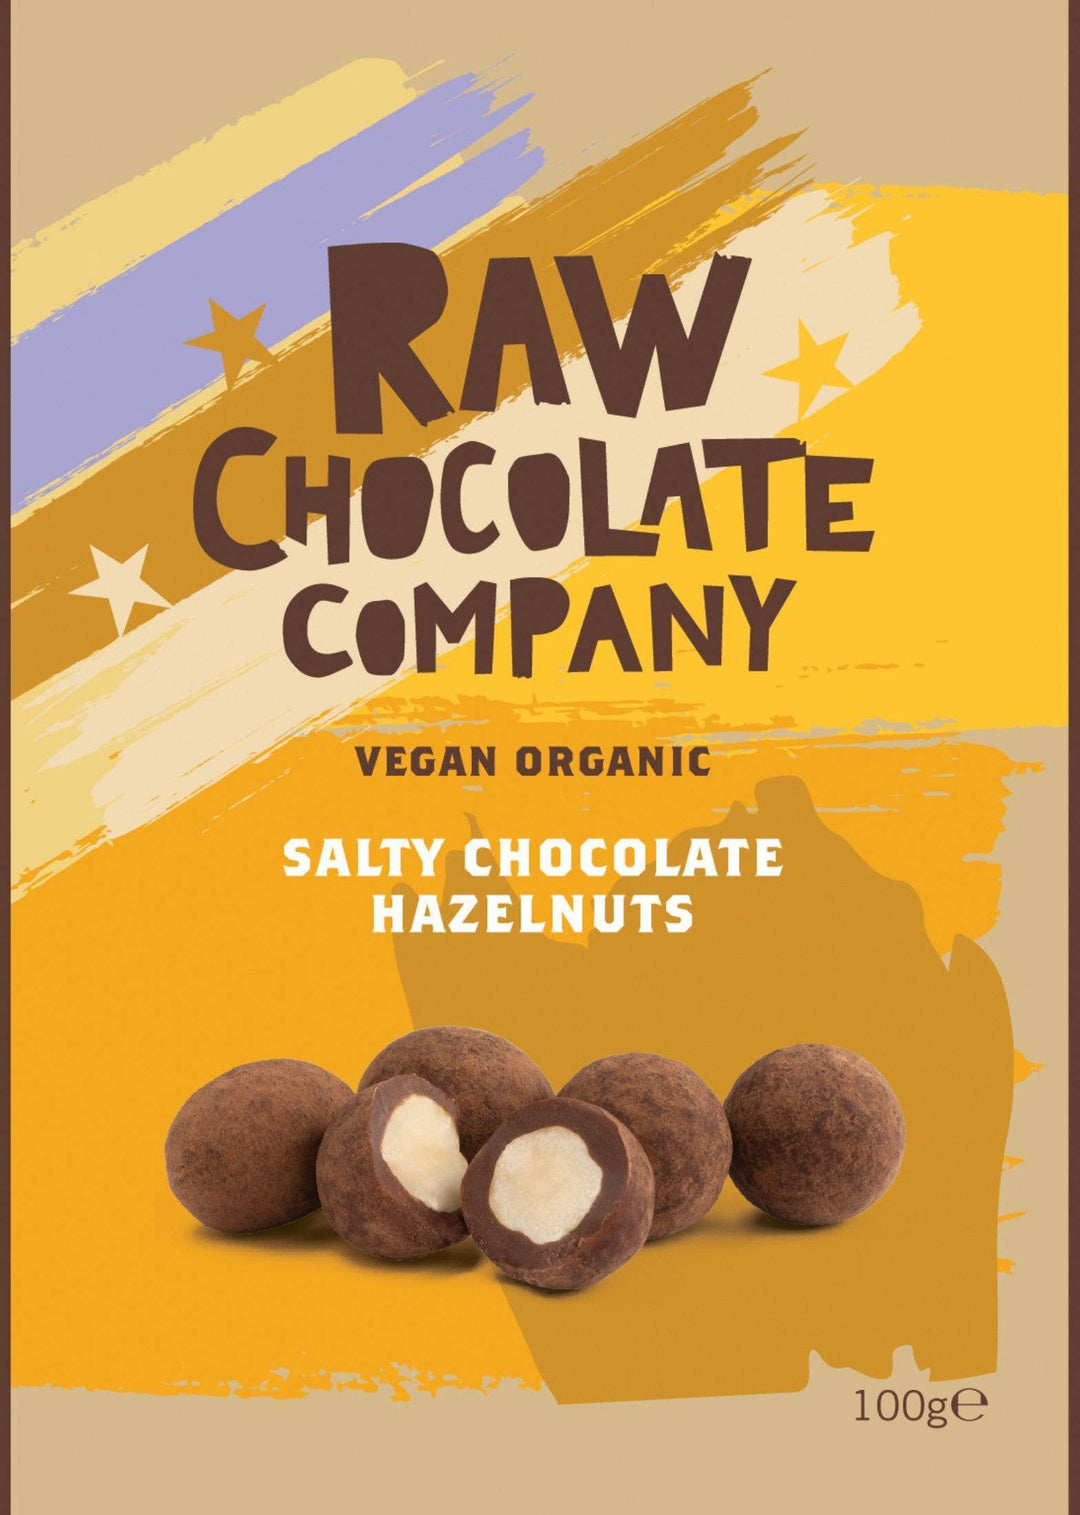 Salty Chocolate Hazelnuts 100g, Vegan Organic